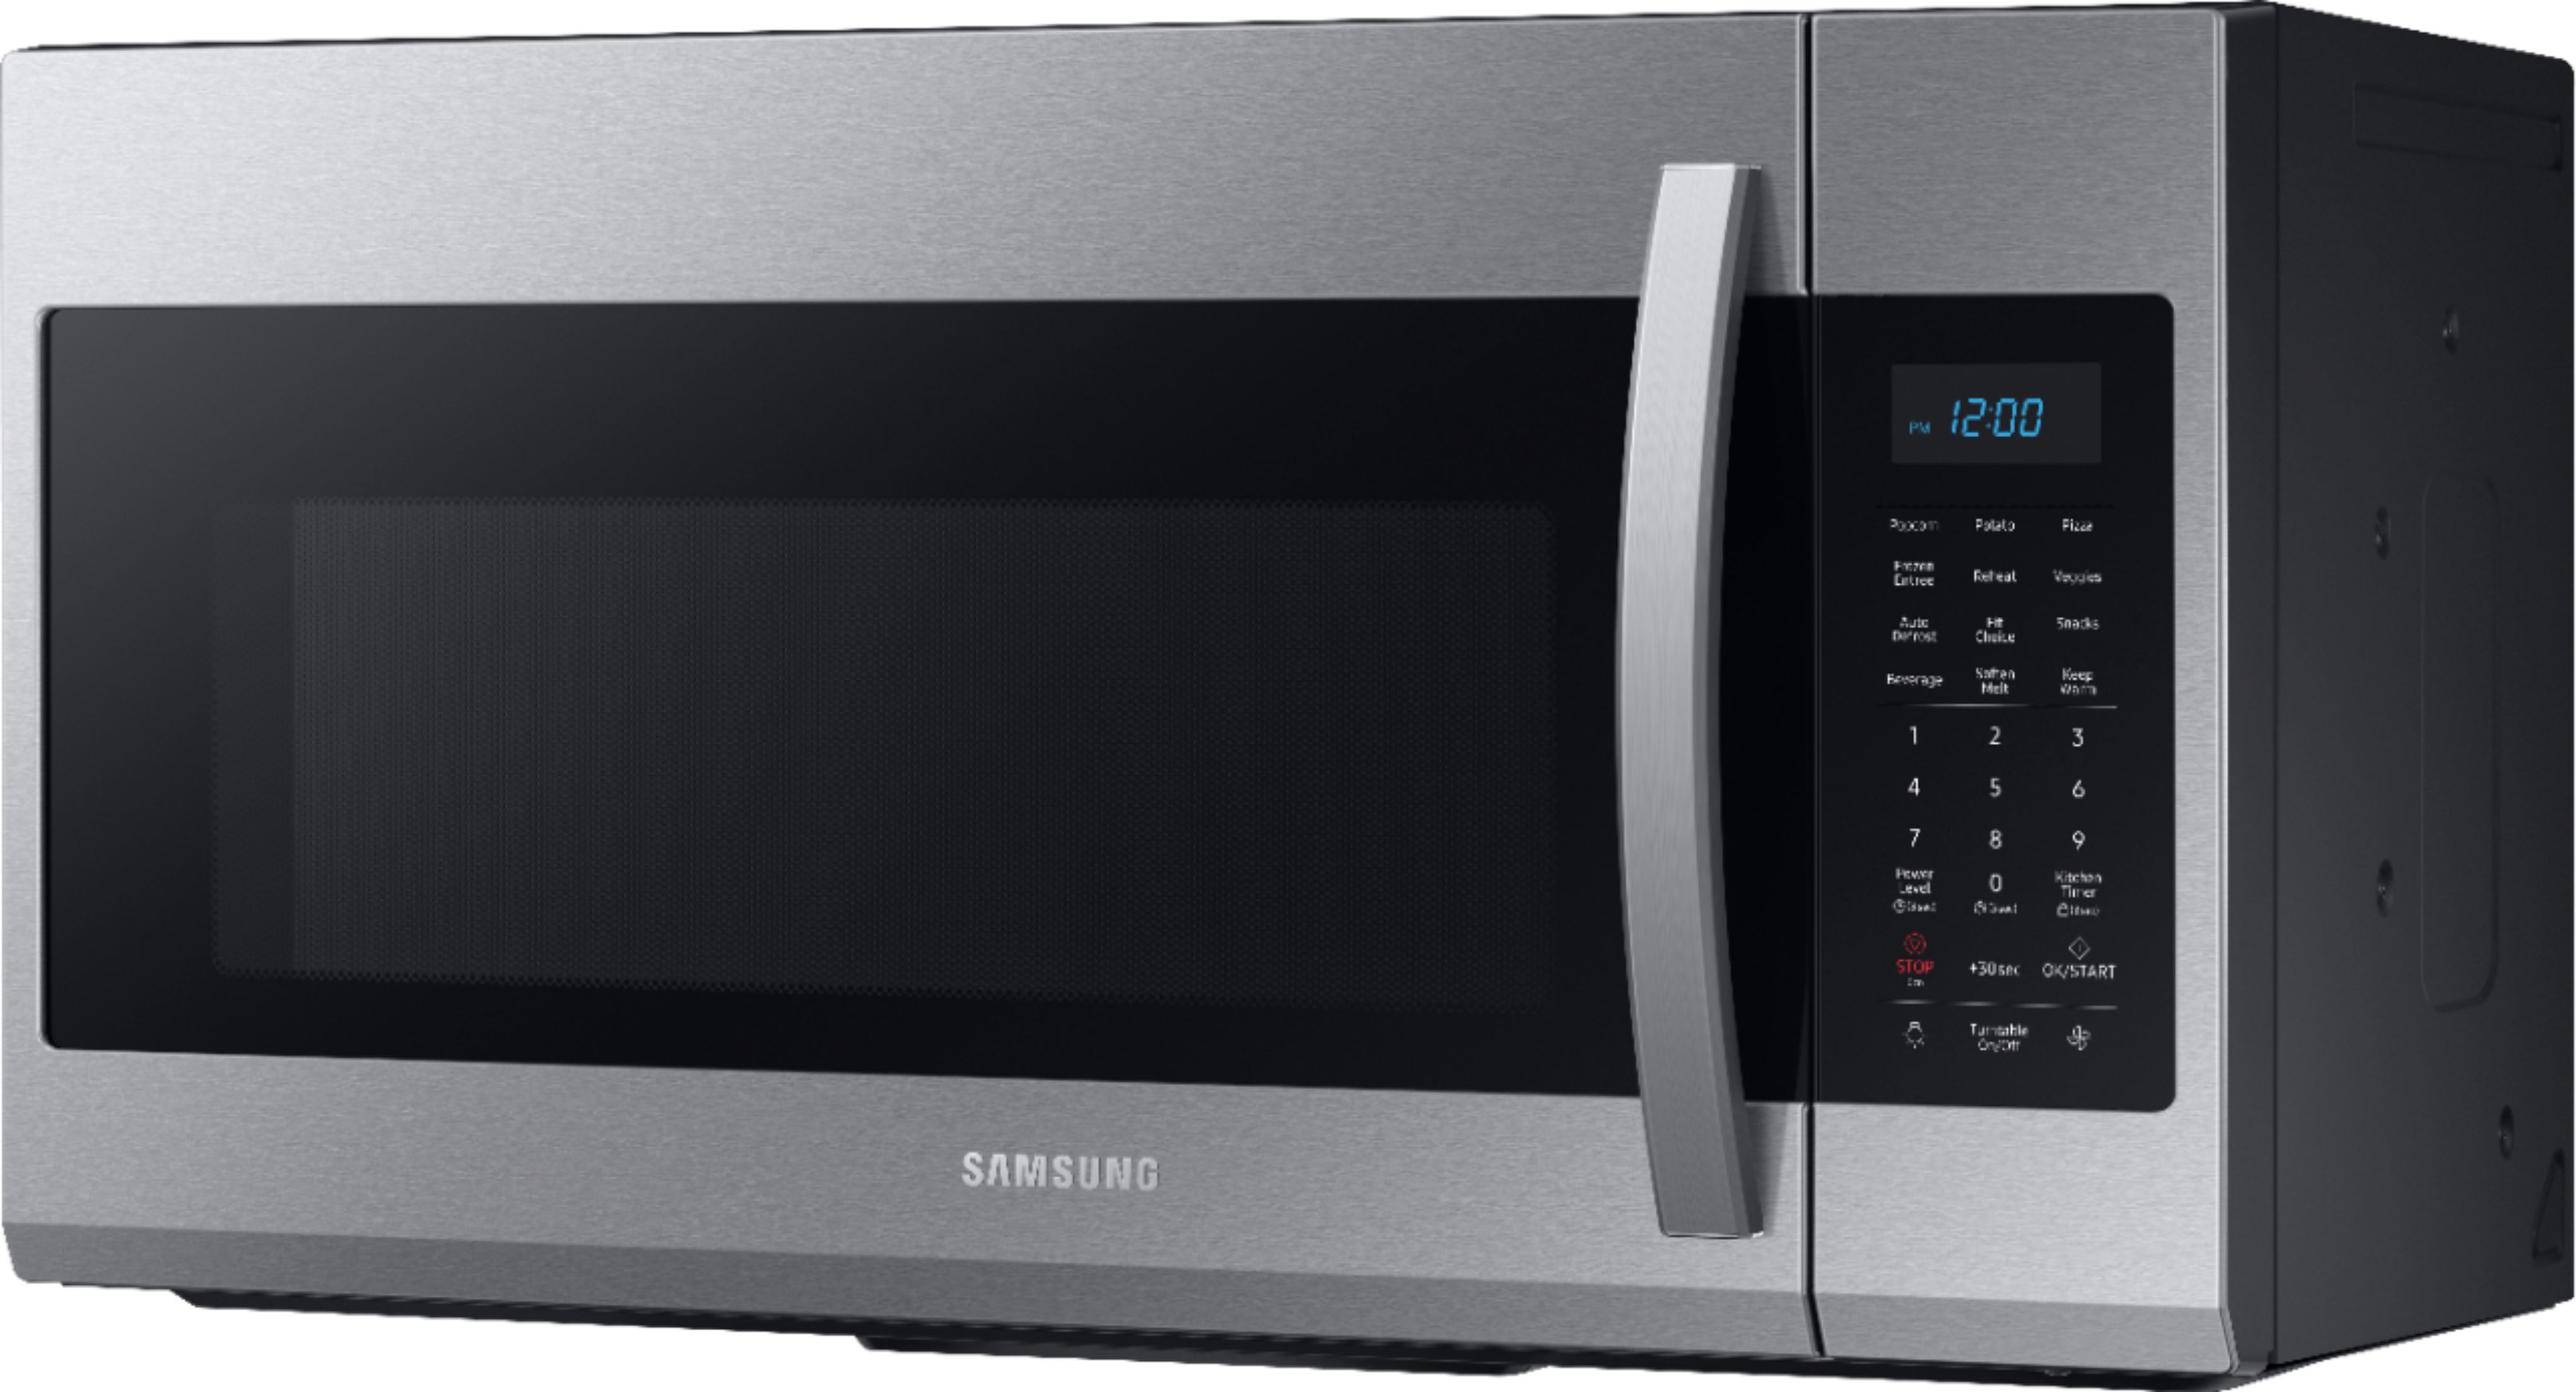  Samsung Toaster